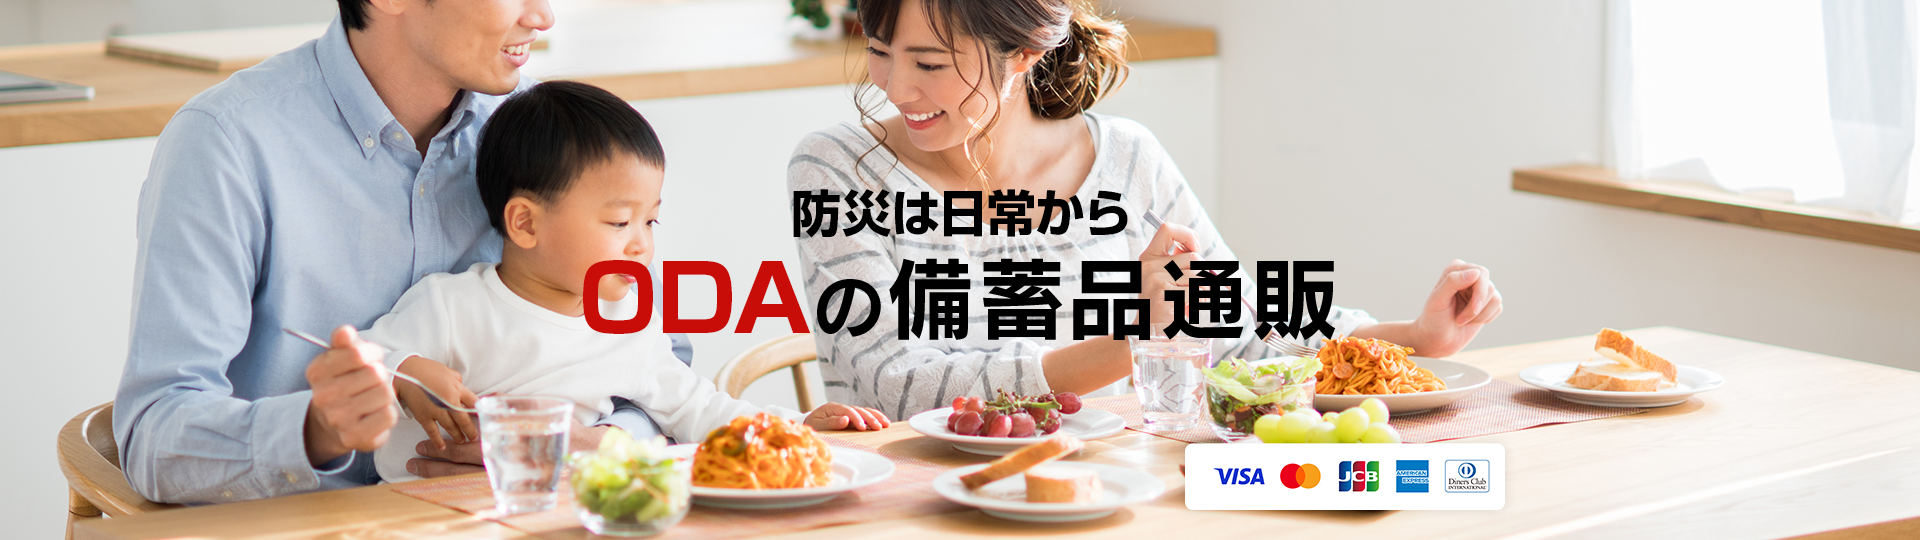 ODA株式会社